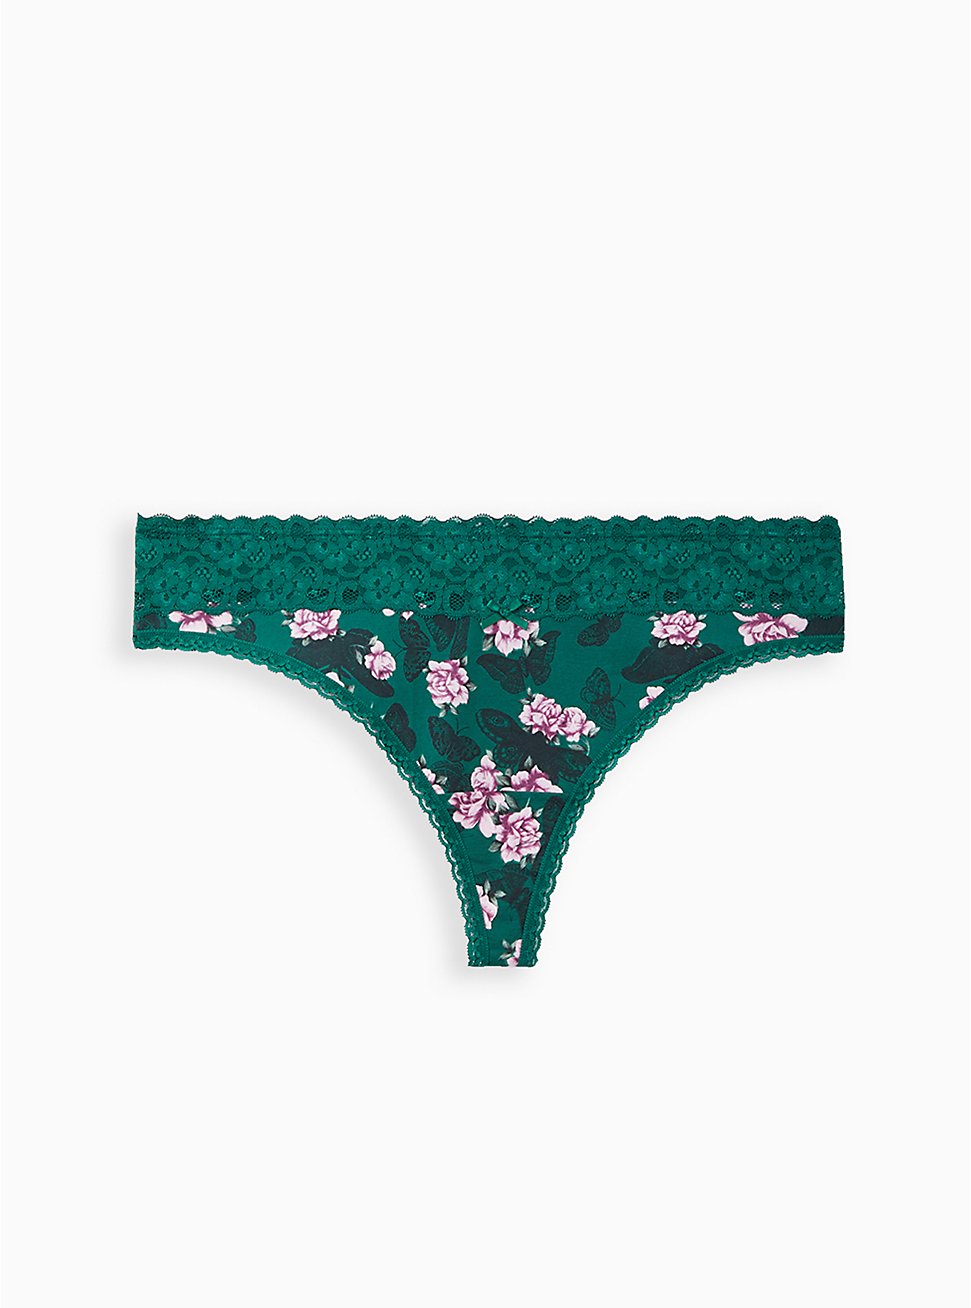 Plus Size Wide Lace Trim Thong Panty -  Cotton Floral Green, MULTI FORAL, hi-res